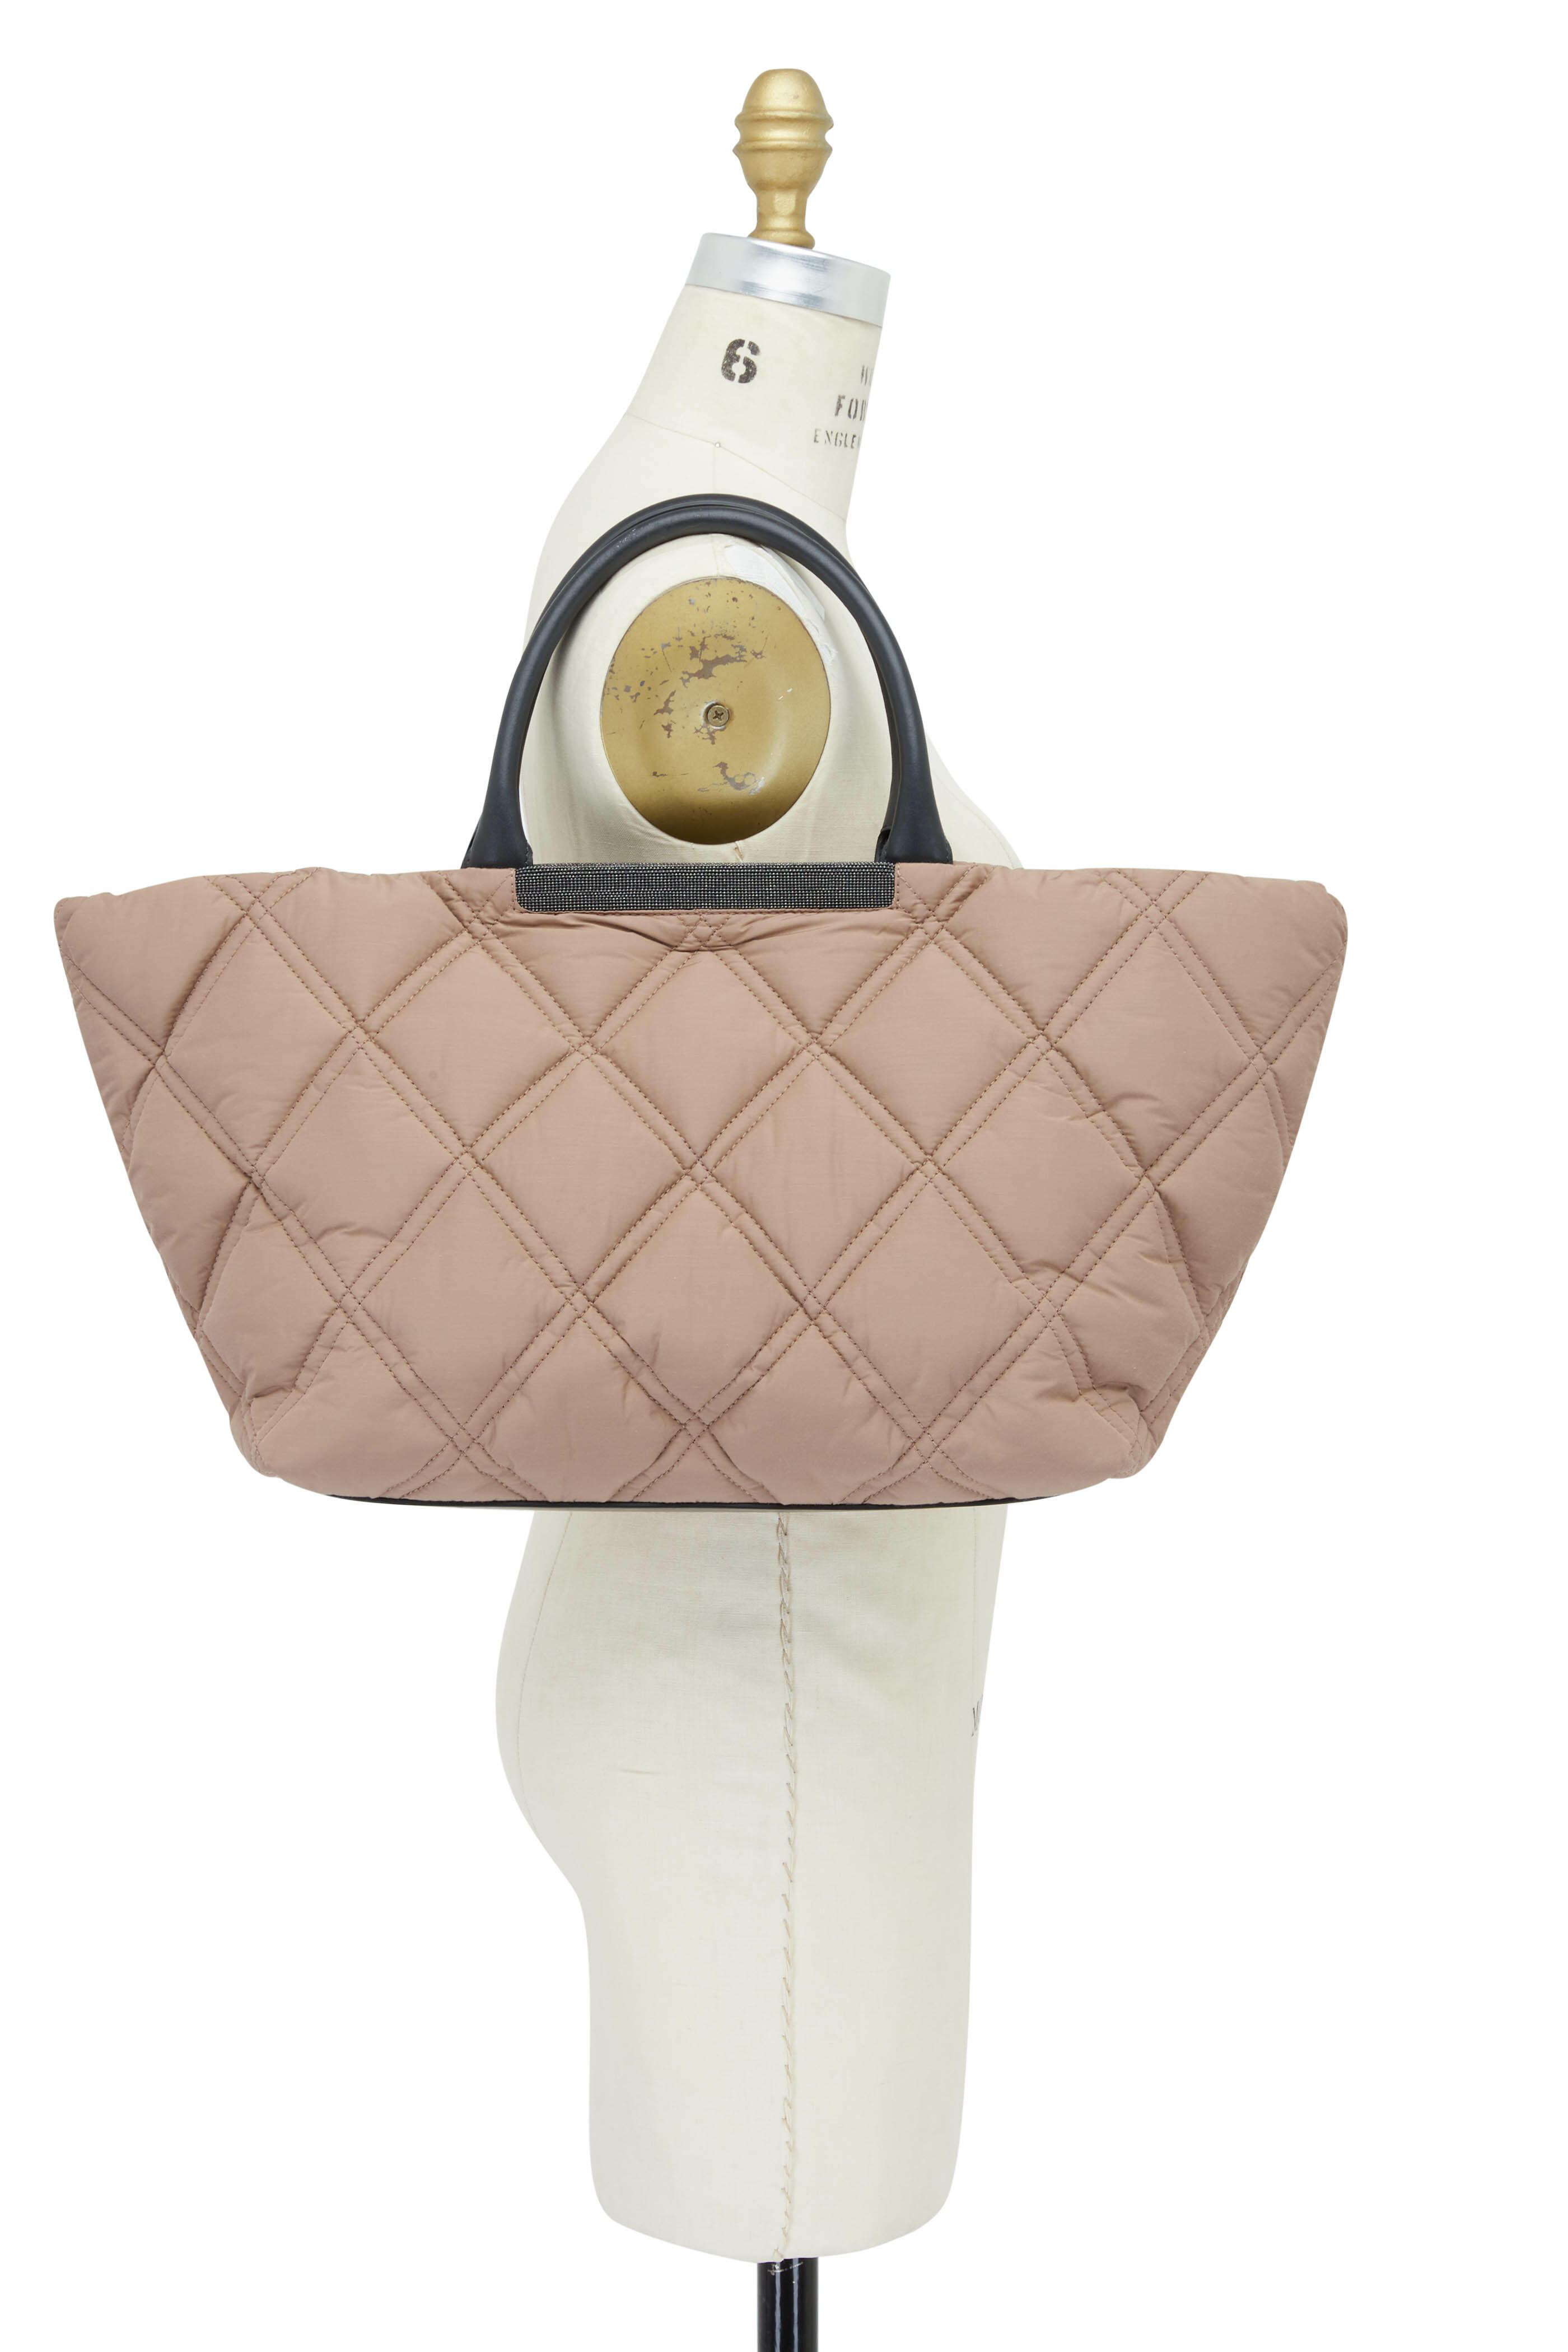 Chanel Grey Raffia Deauville Messenger Bag Chanel